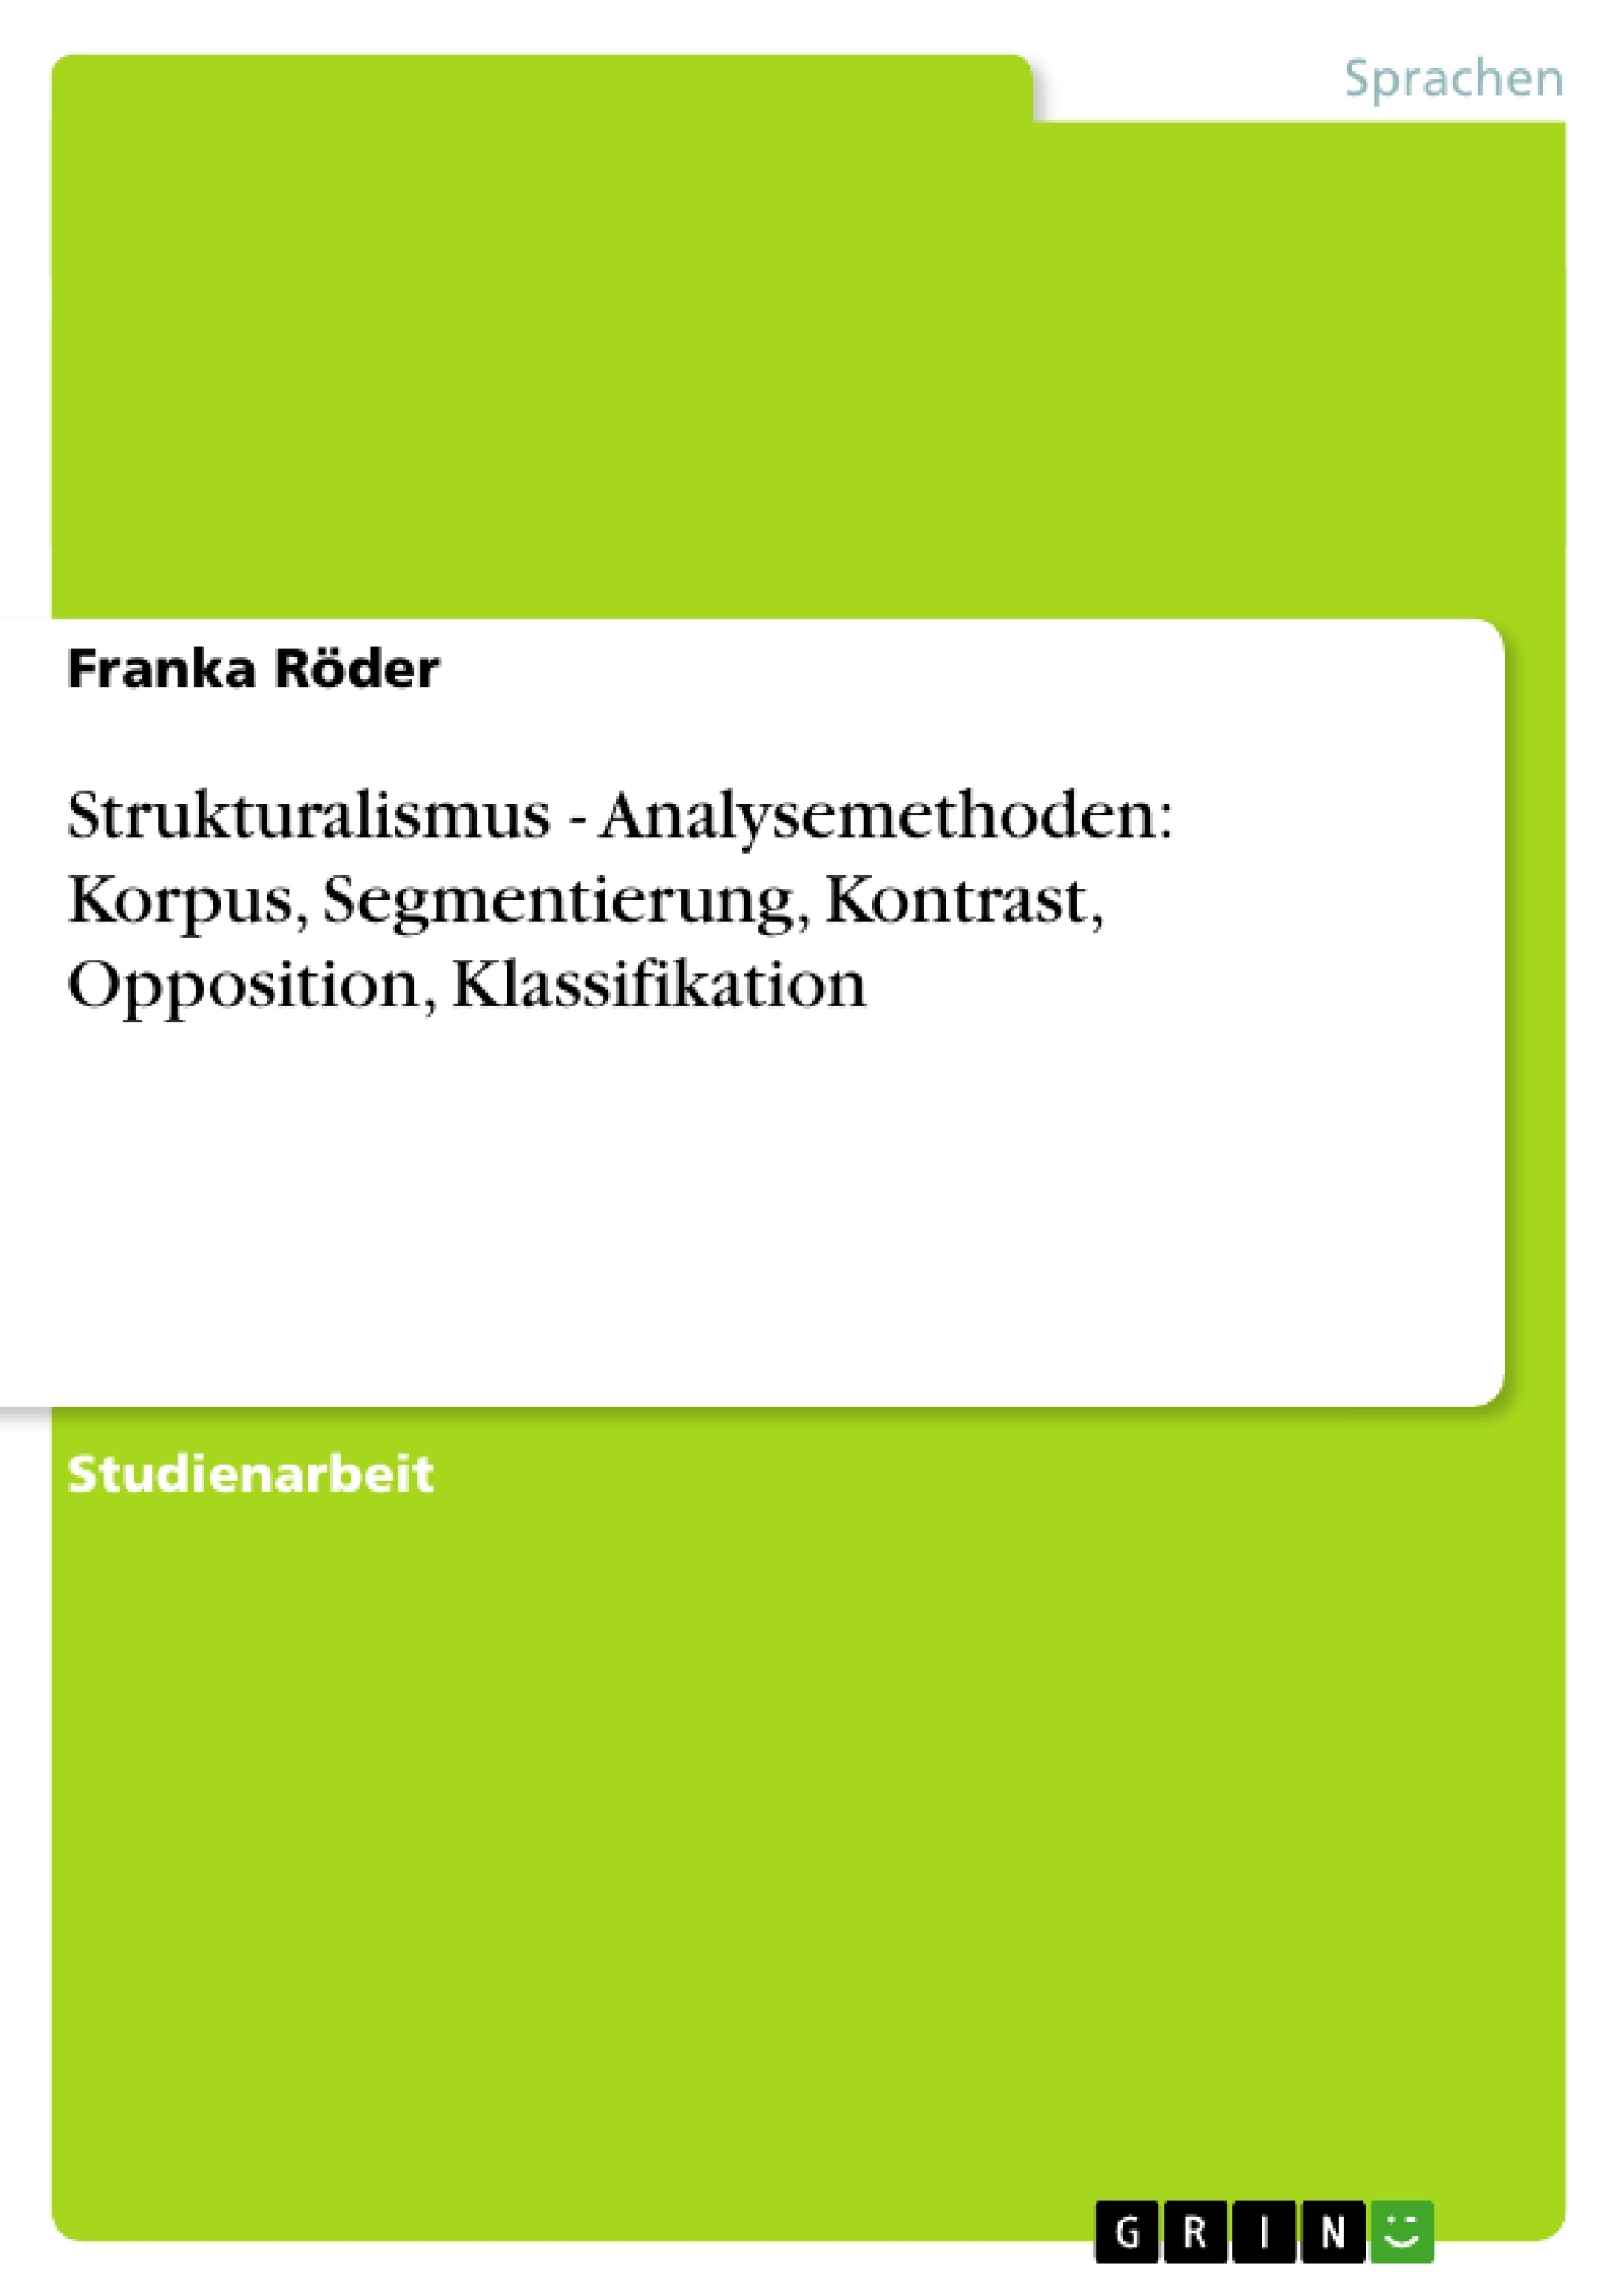 Title: Strukturalismus - Analysemethoden: Korpus, Segmentierung, Kontrast, Opposition, Klassifikation